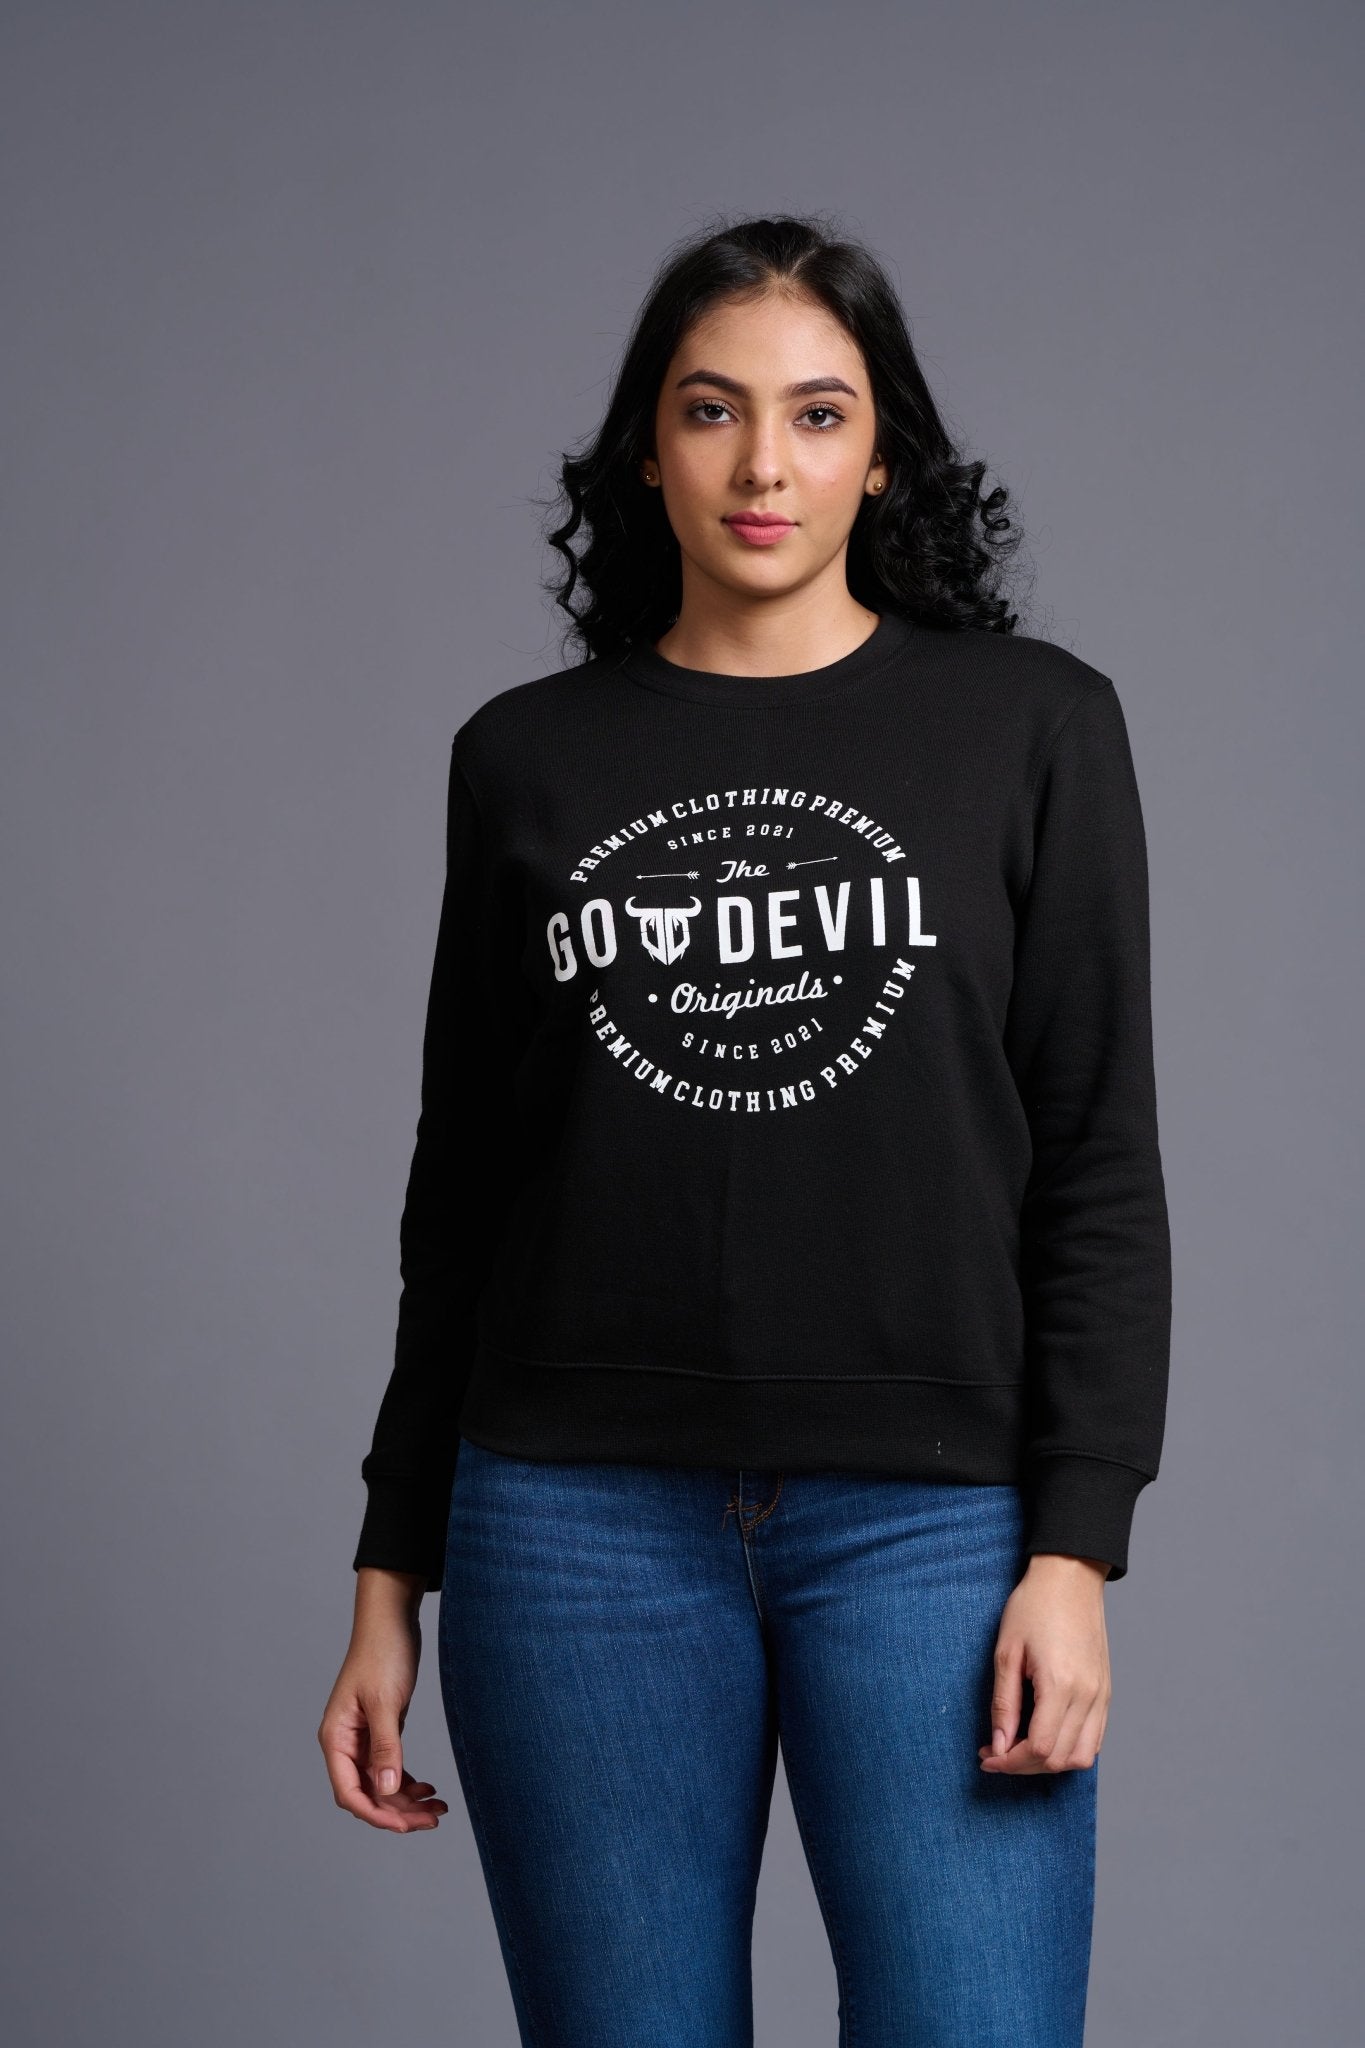 Go Devil Originals Printed Black Sweatshirt for Women - Go Devil